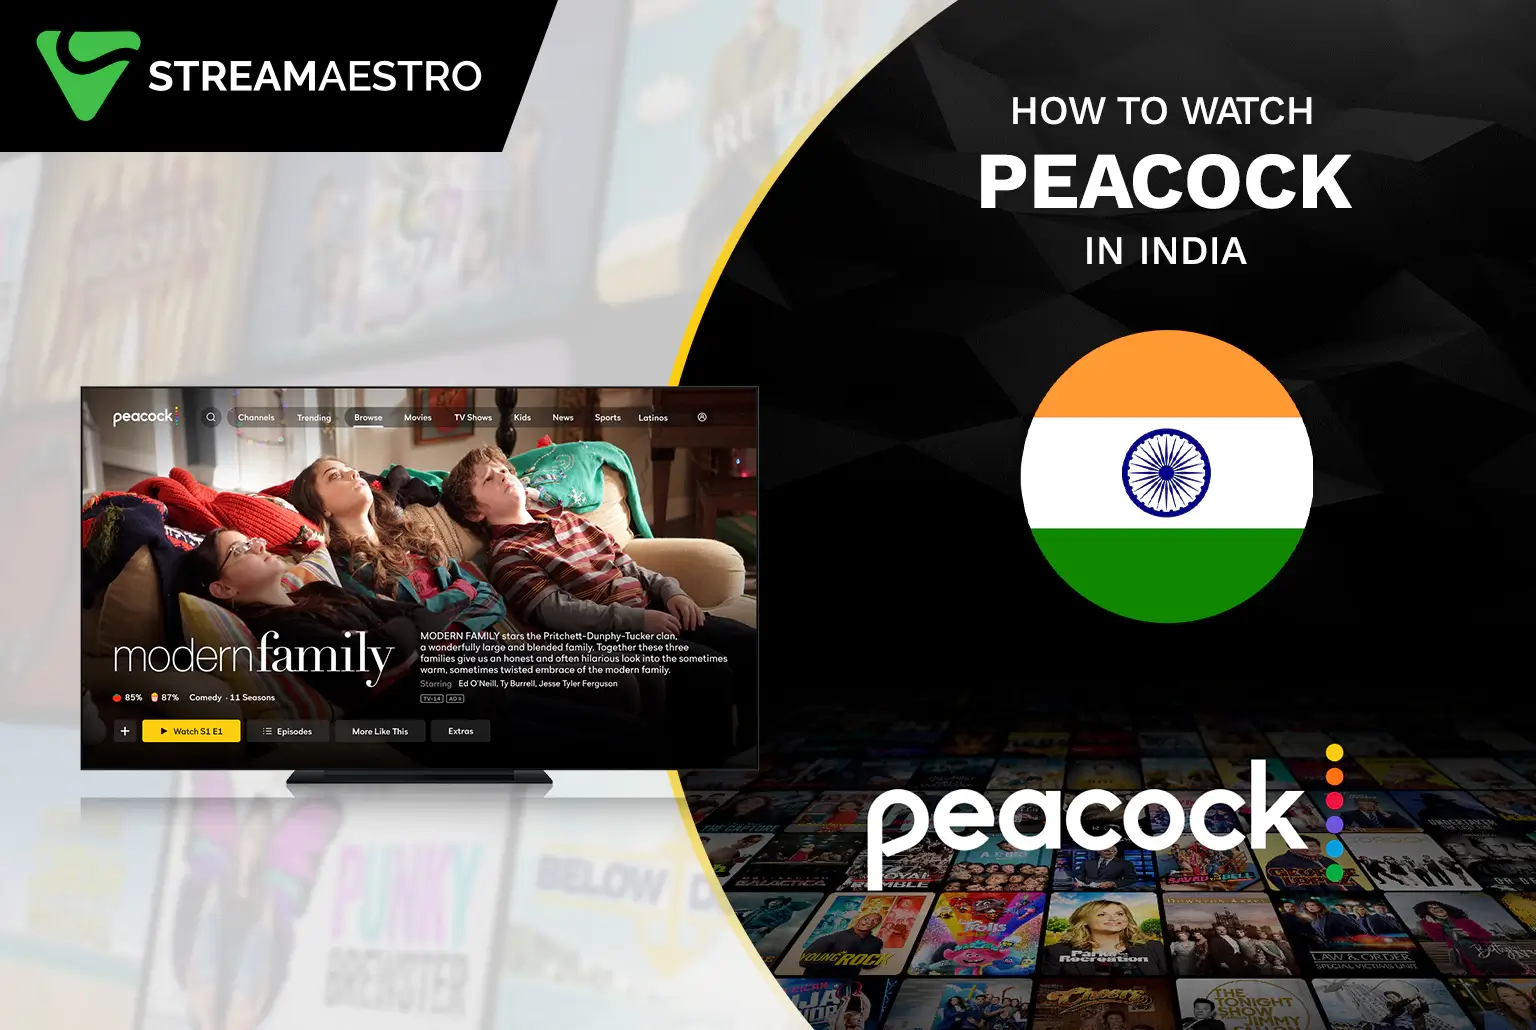 Peacock TV in India